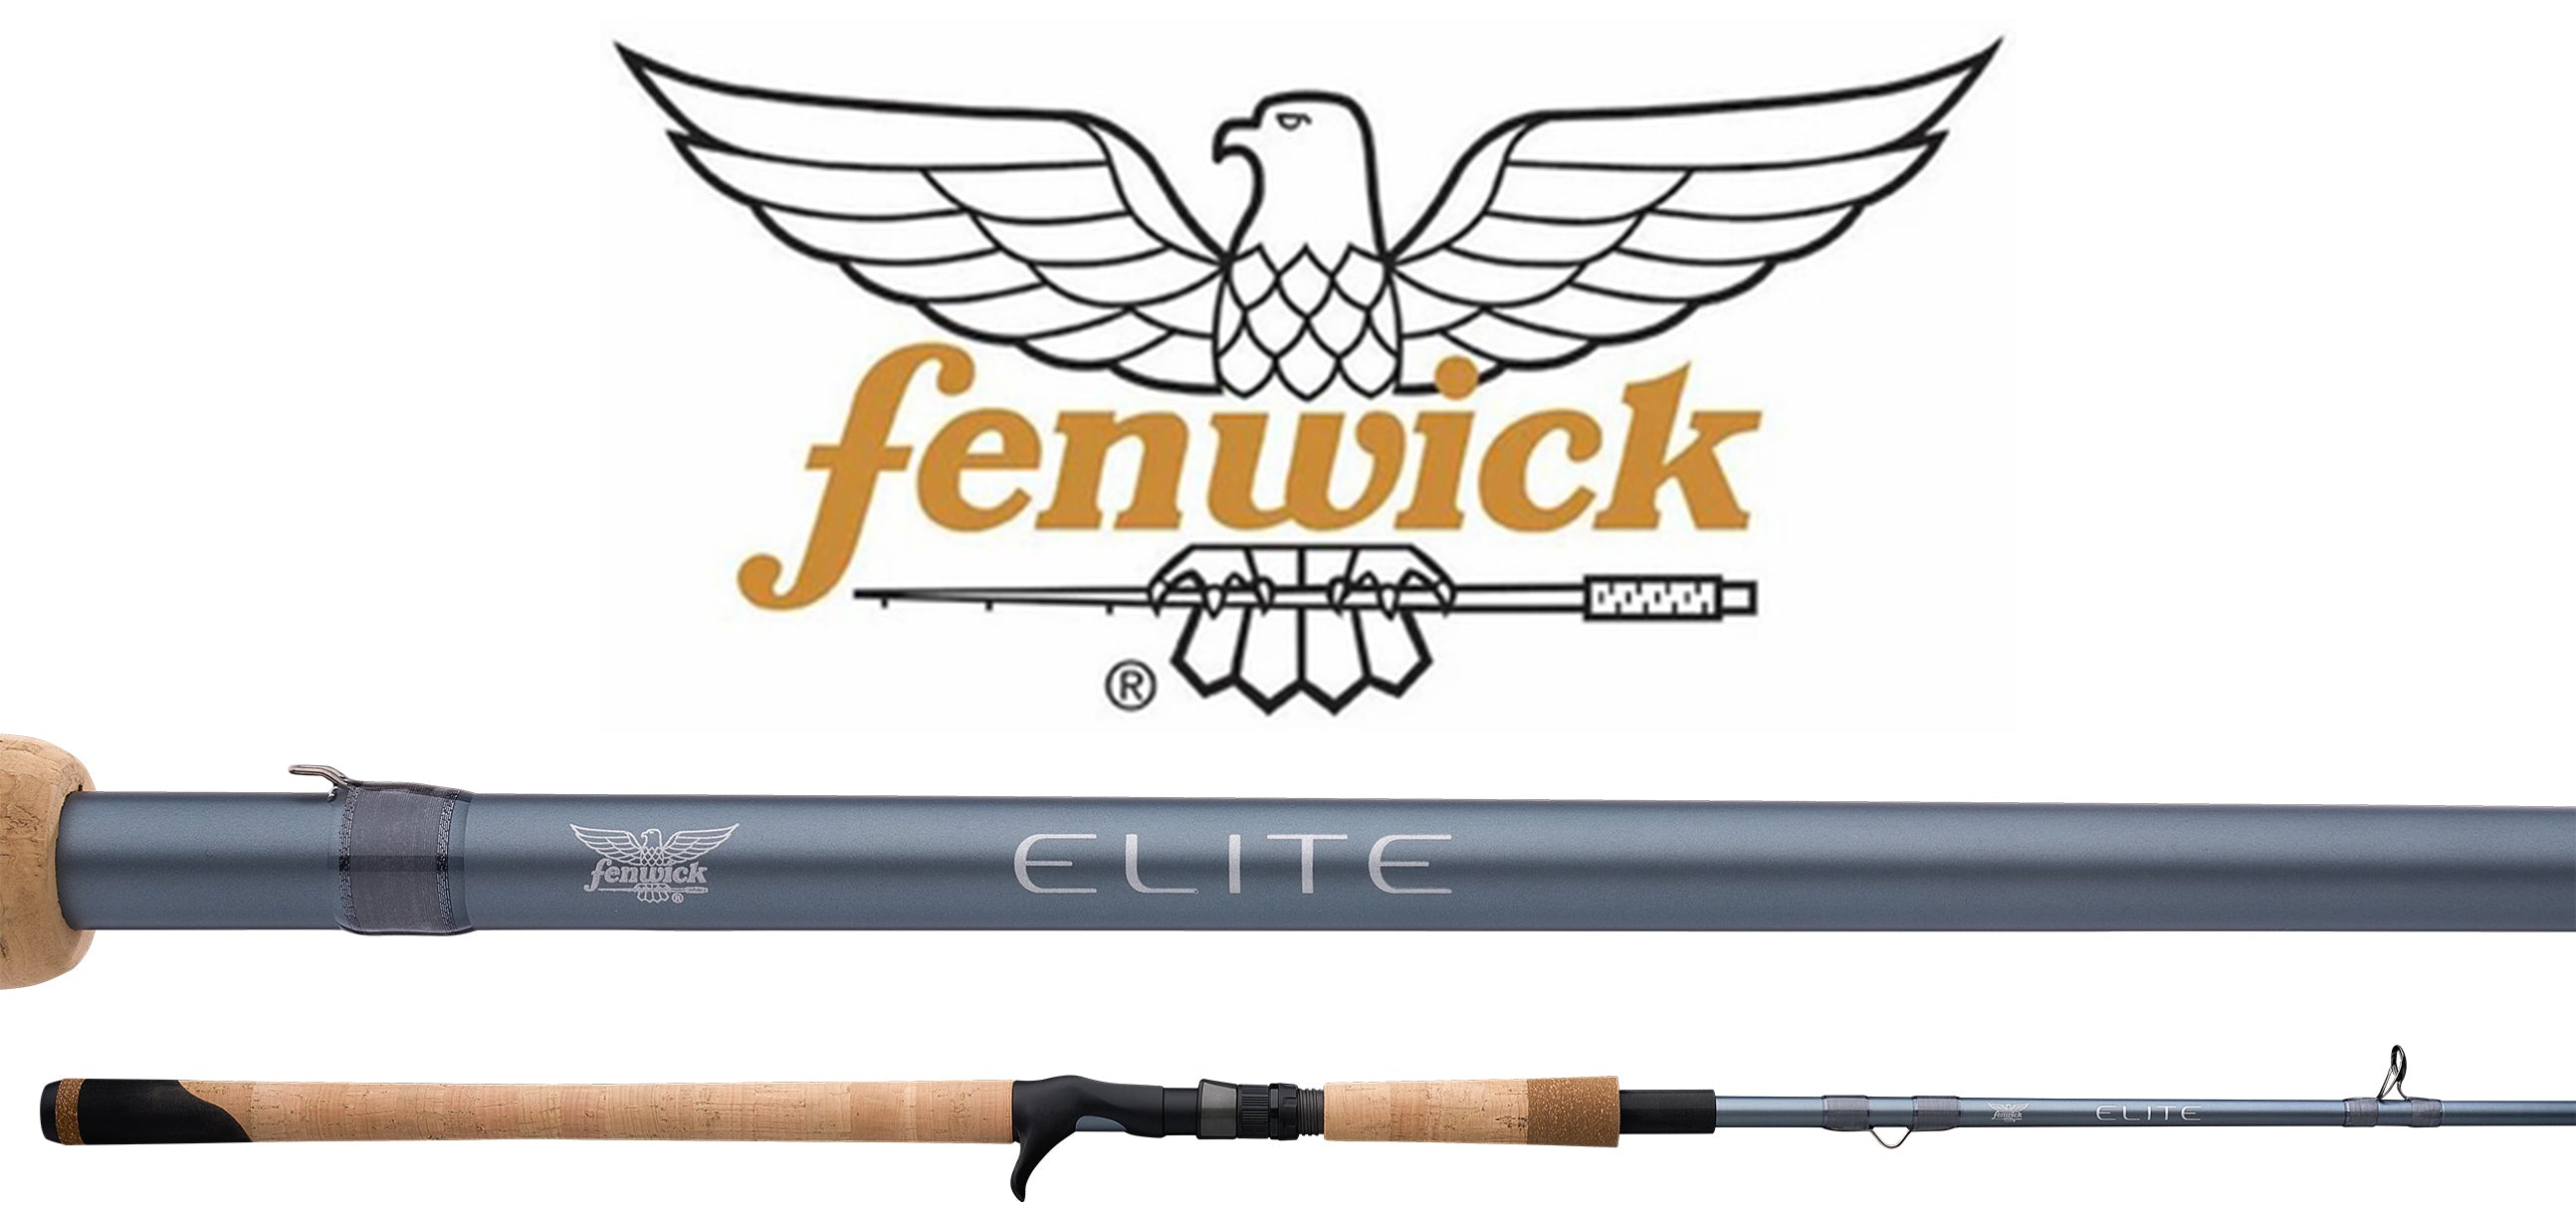 Fenwick Eagle - Fenwick US